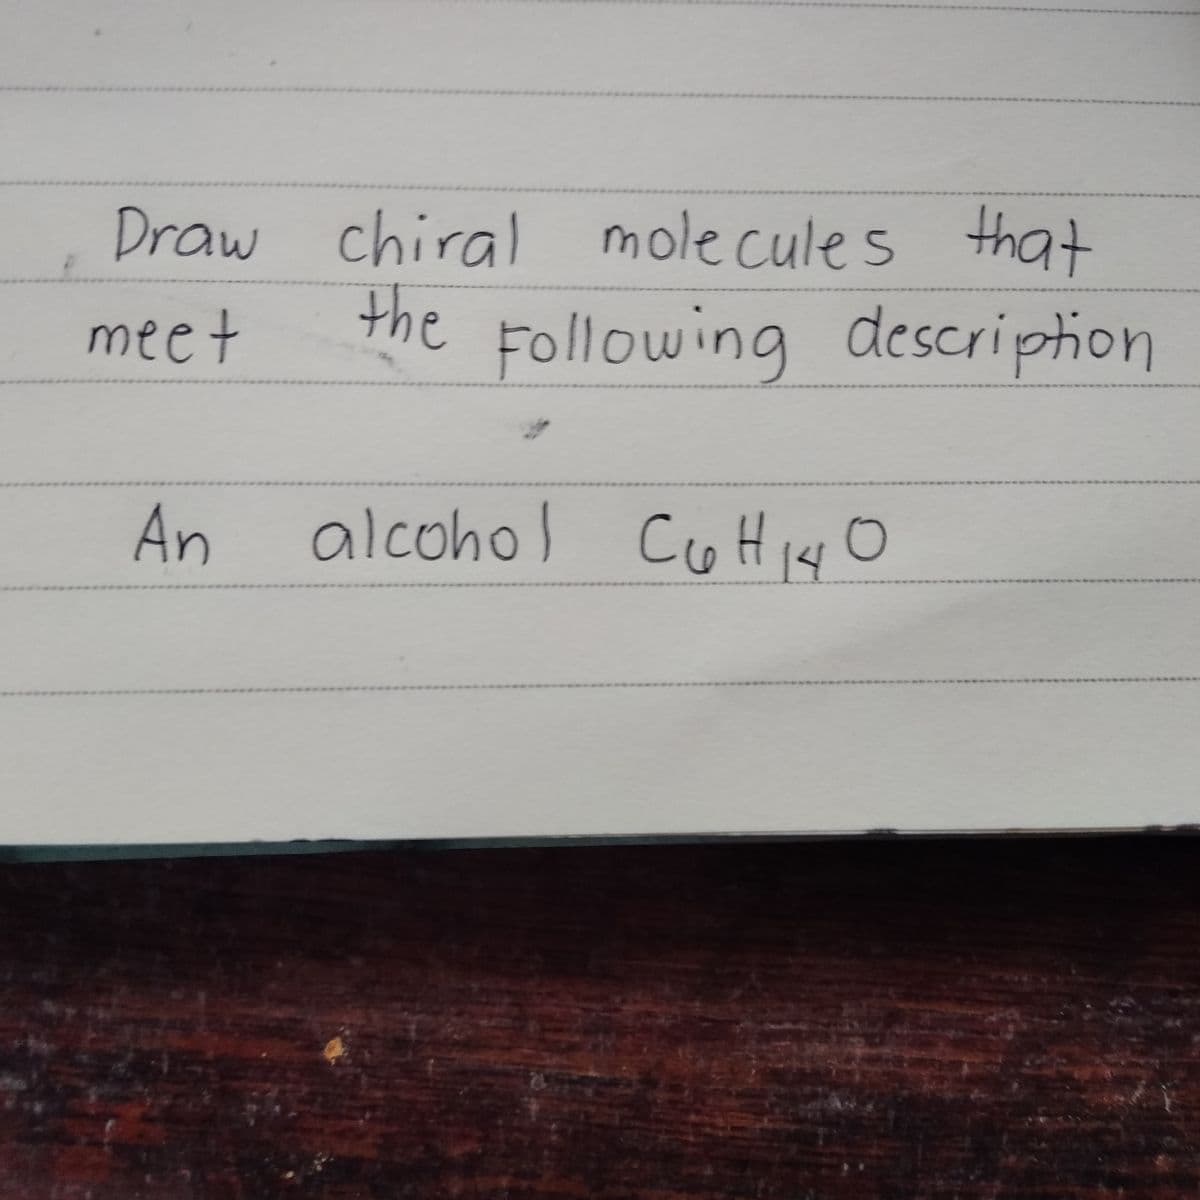 Draw chiral molecules that
meet
the Following description
escripton
An
alcohol CoH 144 O
